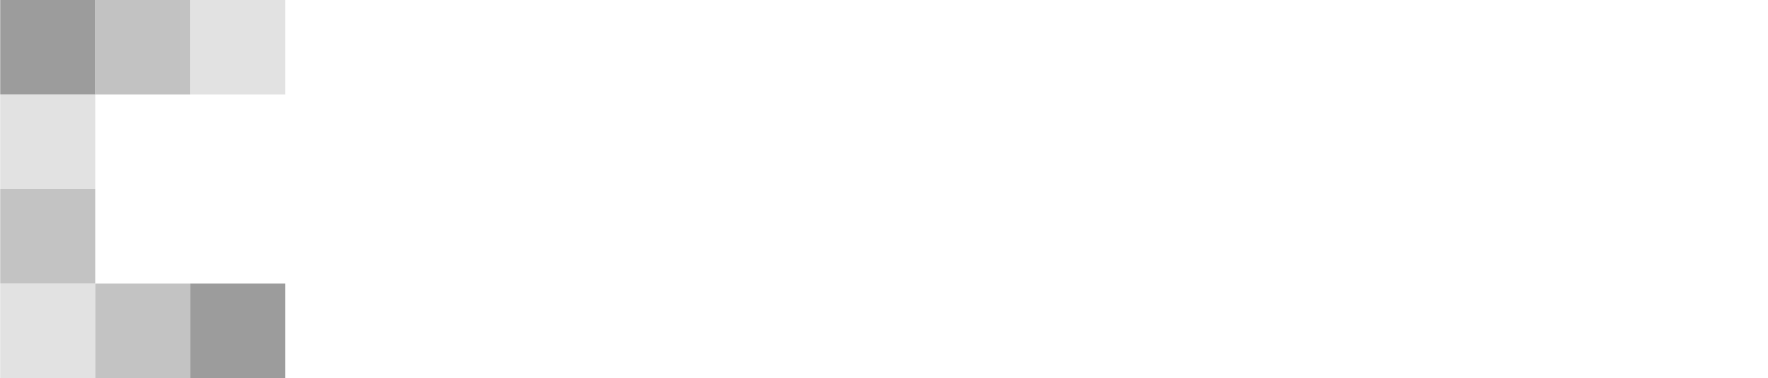 cryptoslate media logo dark